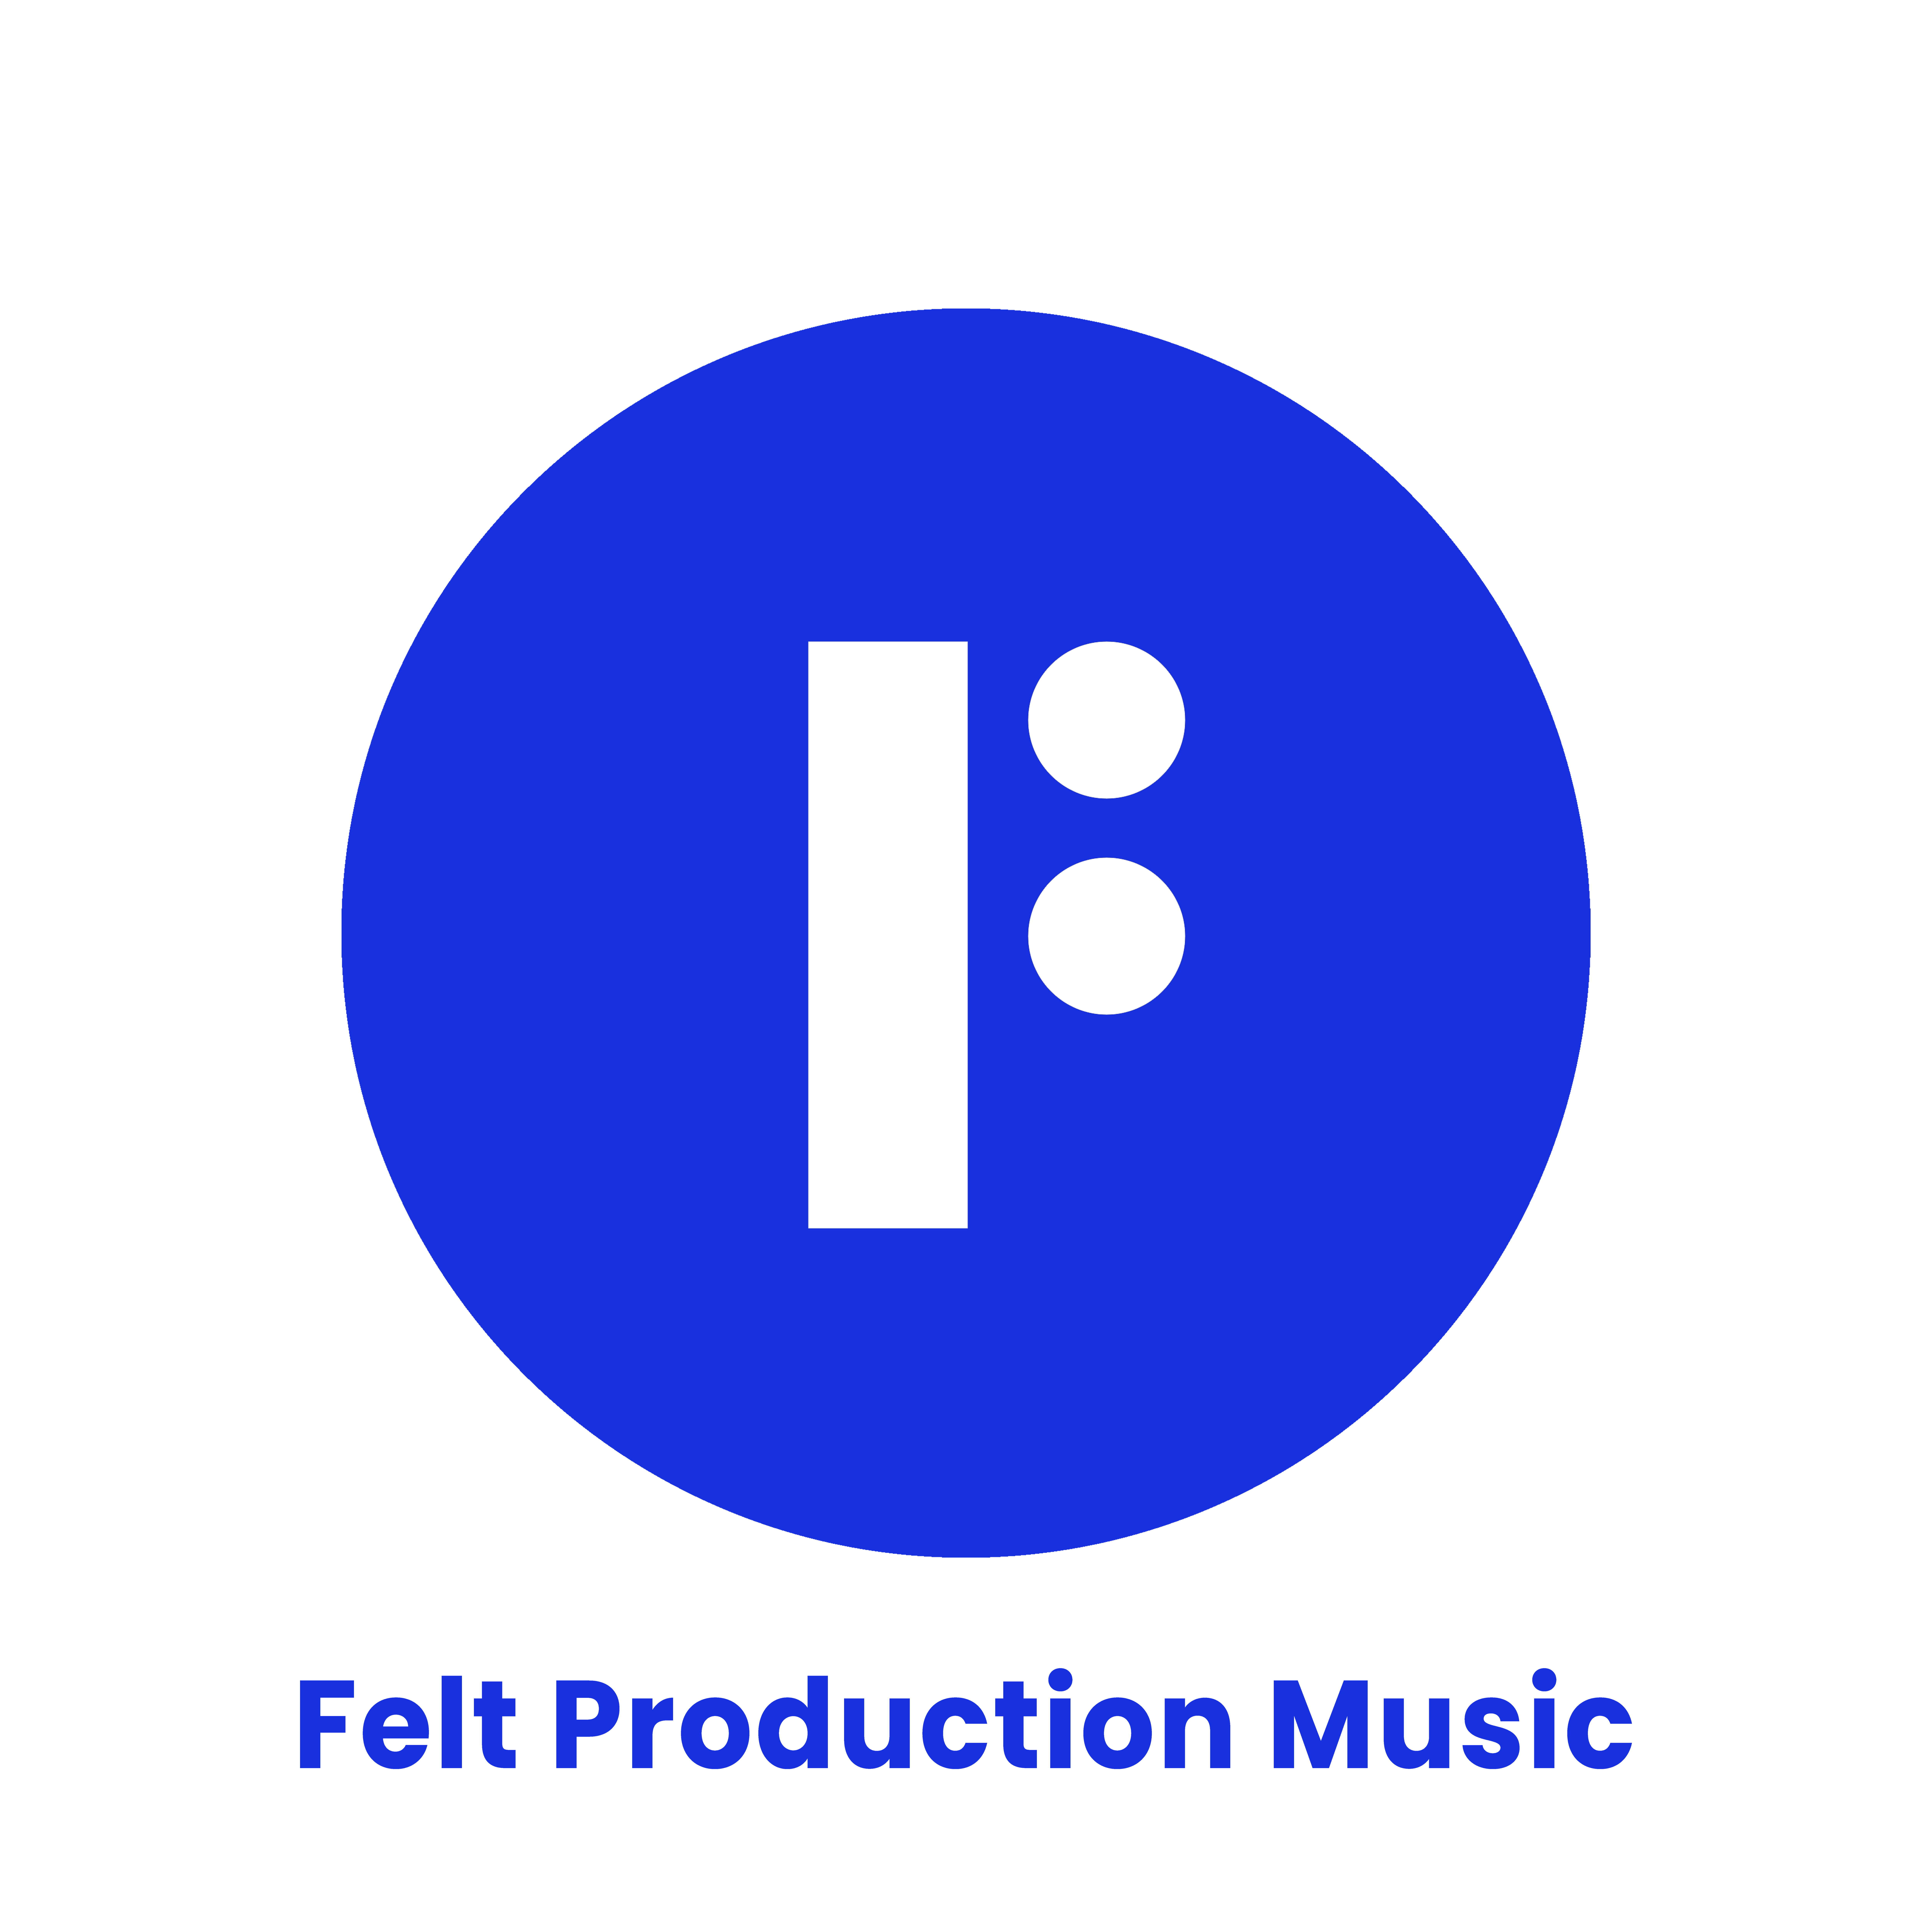 Felt Production Music